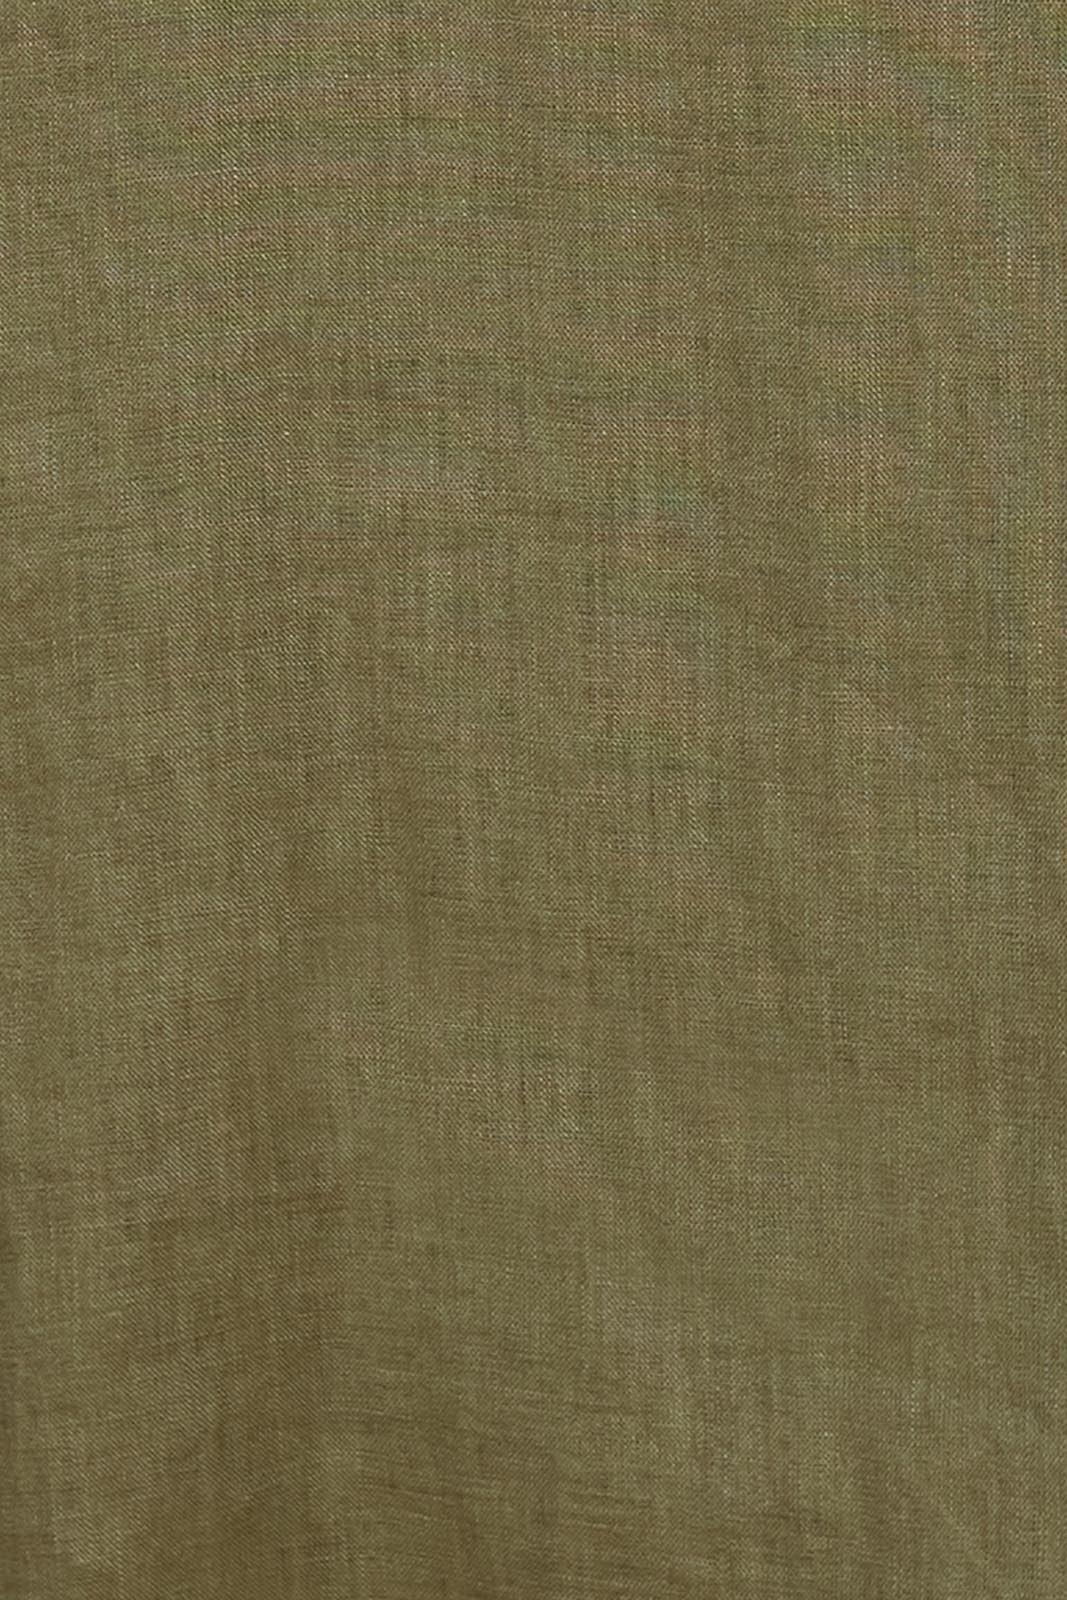 Studio Relaxed Top - Khaki - eb&ive Clothing - Top 3/4 Sleeve Linen